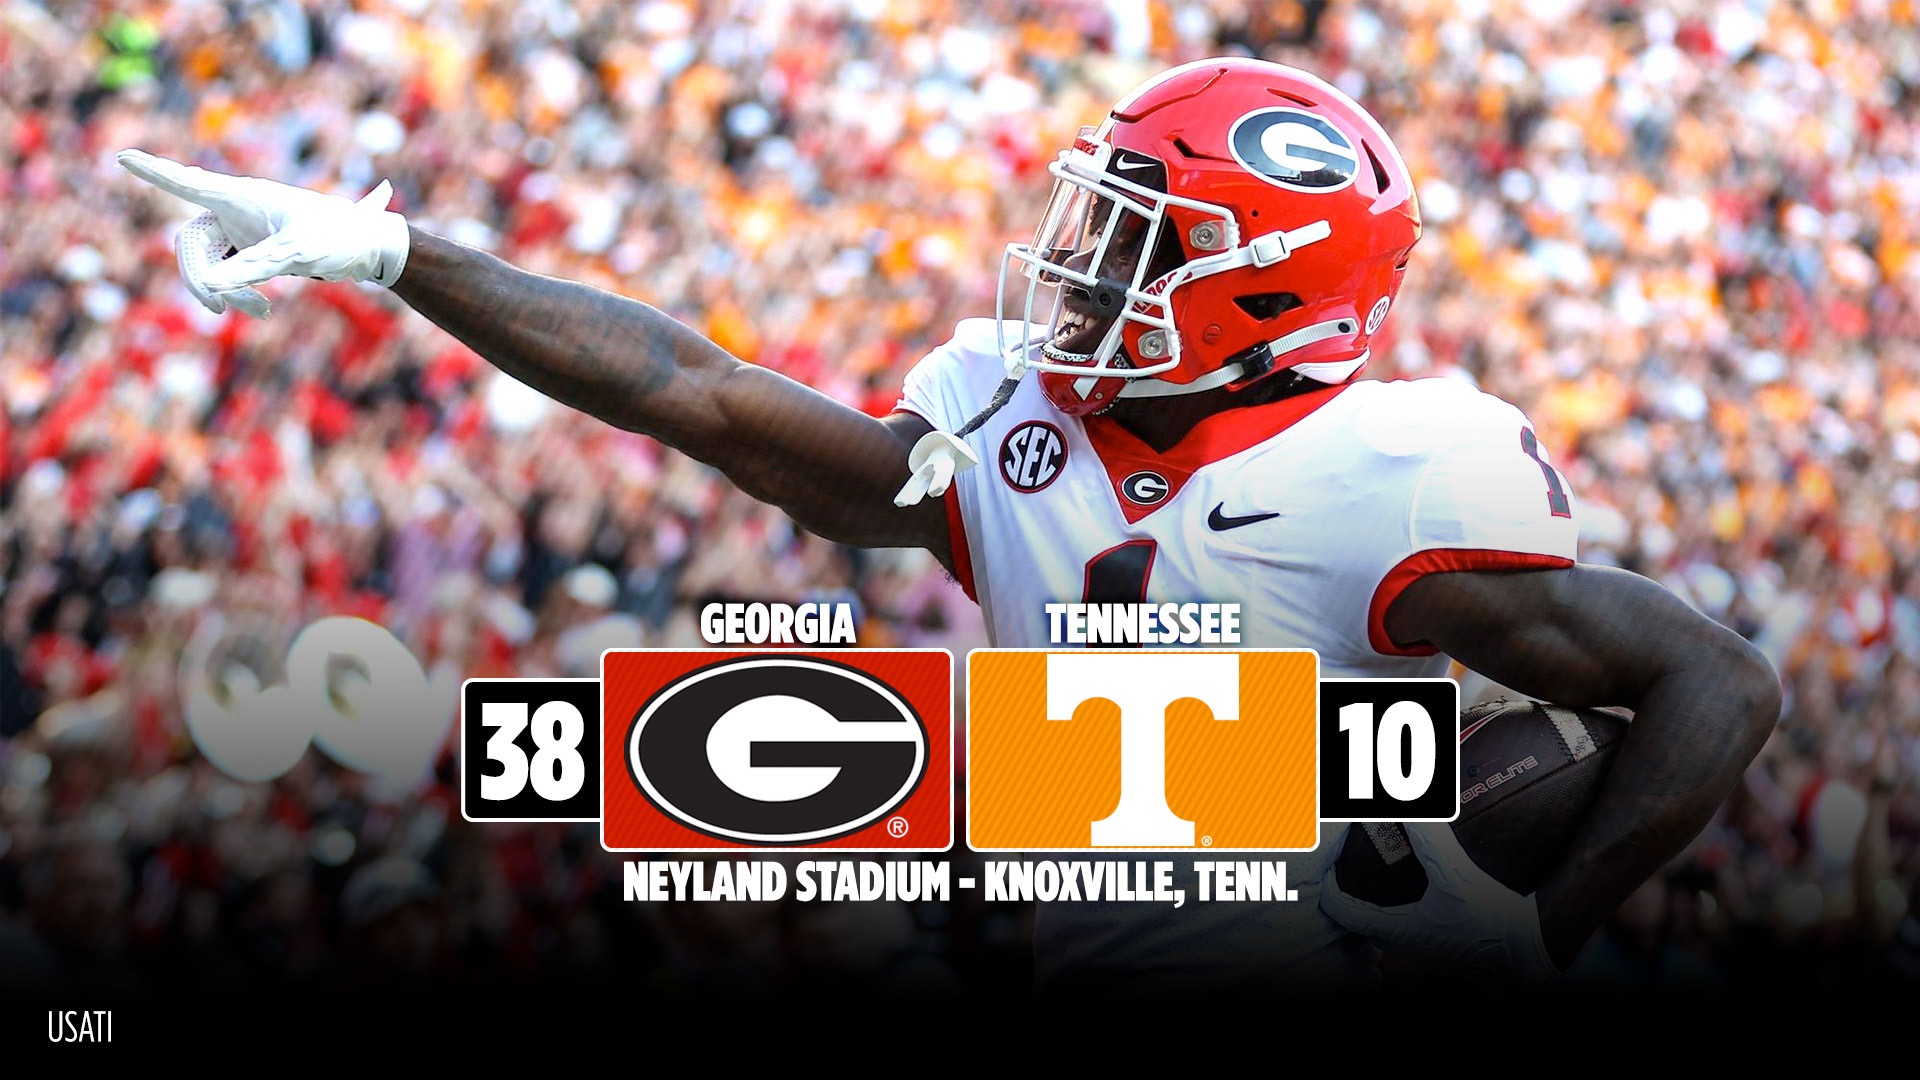 Georgia vs. Tennessee final scoreboard